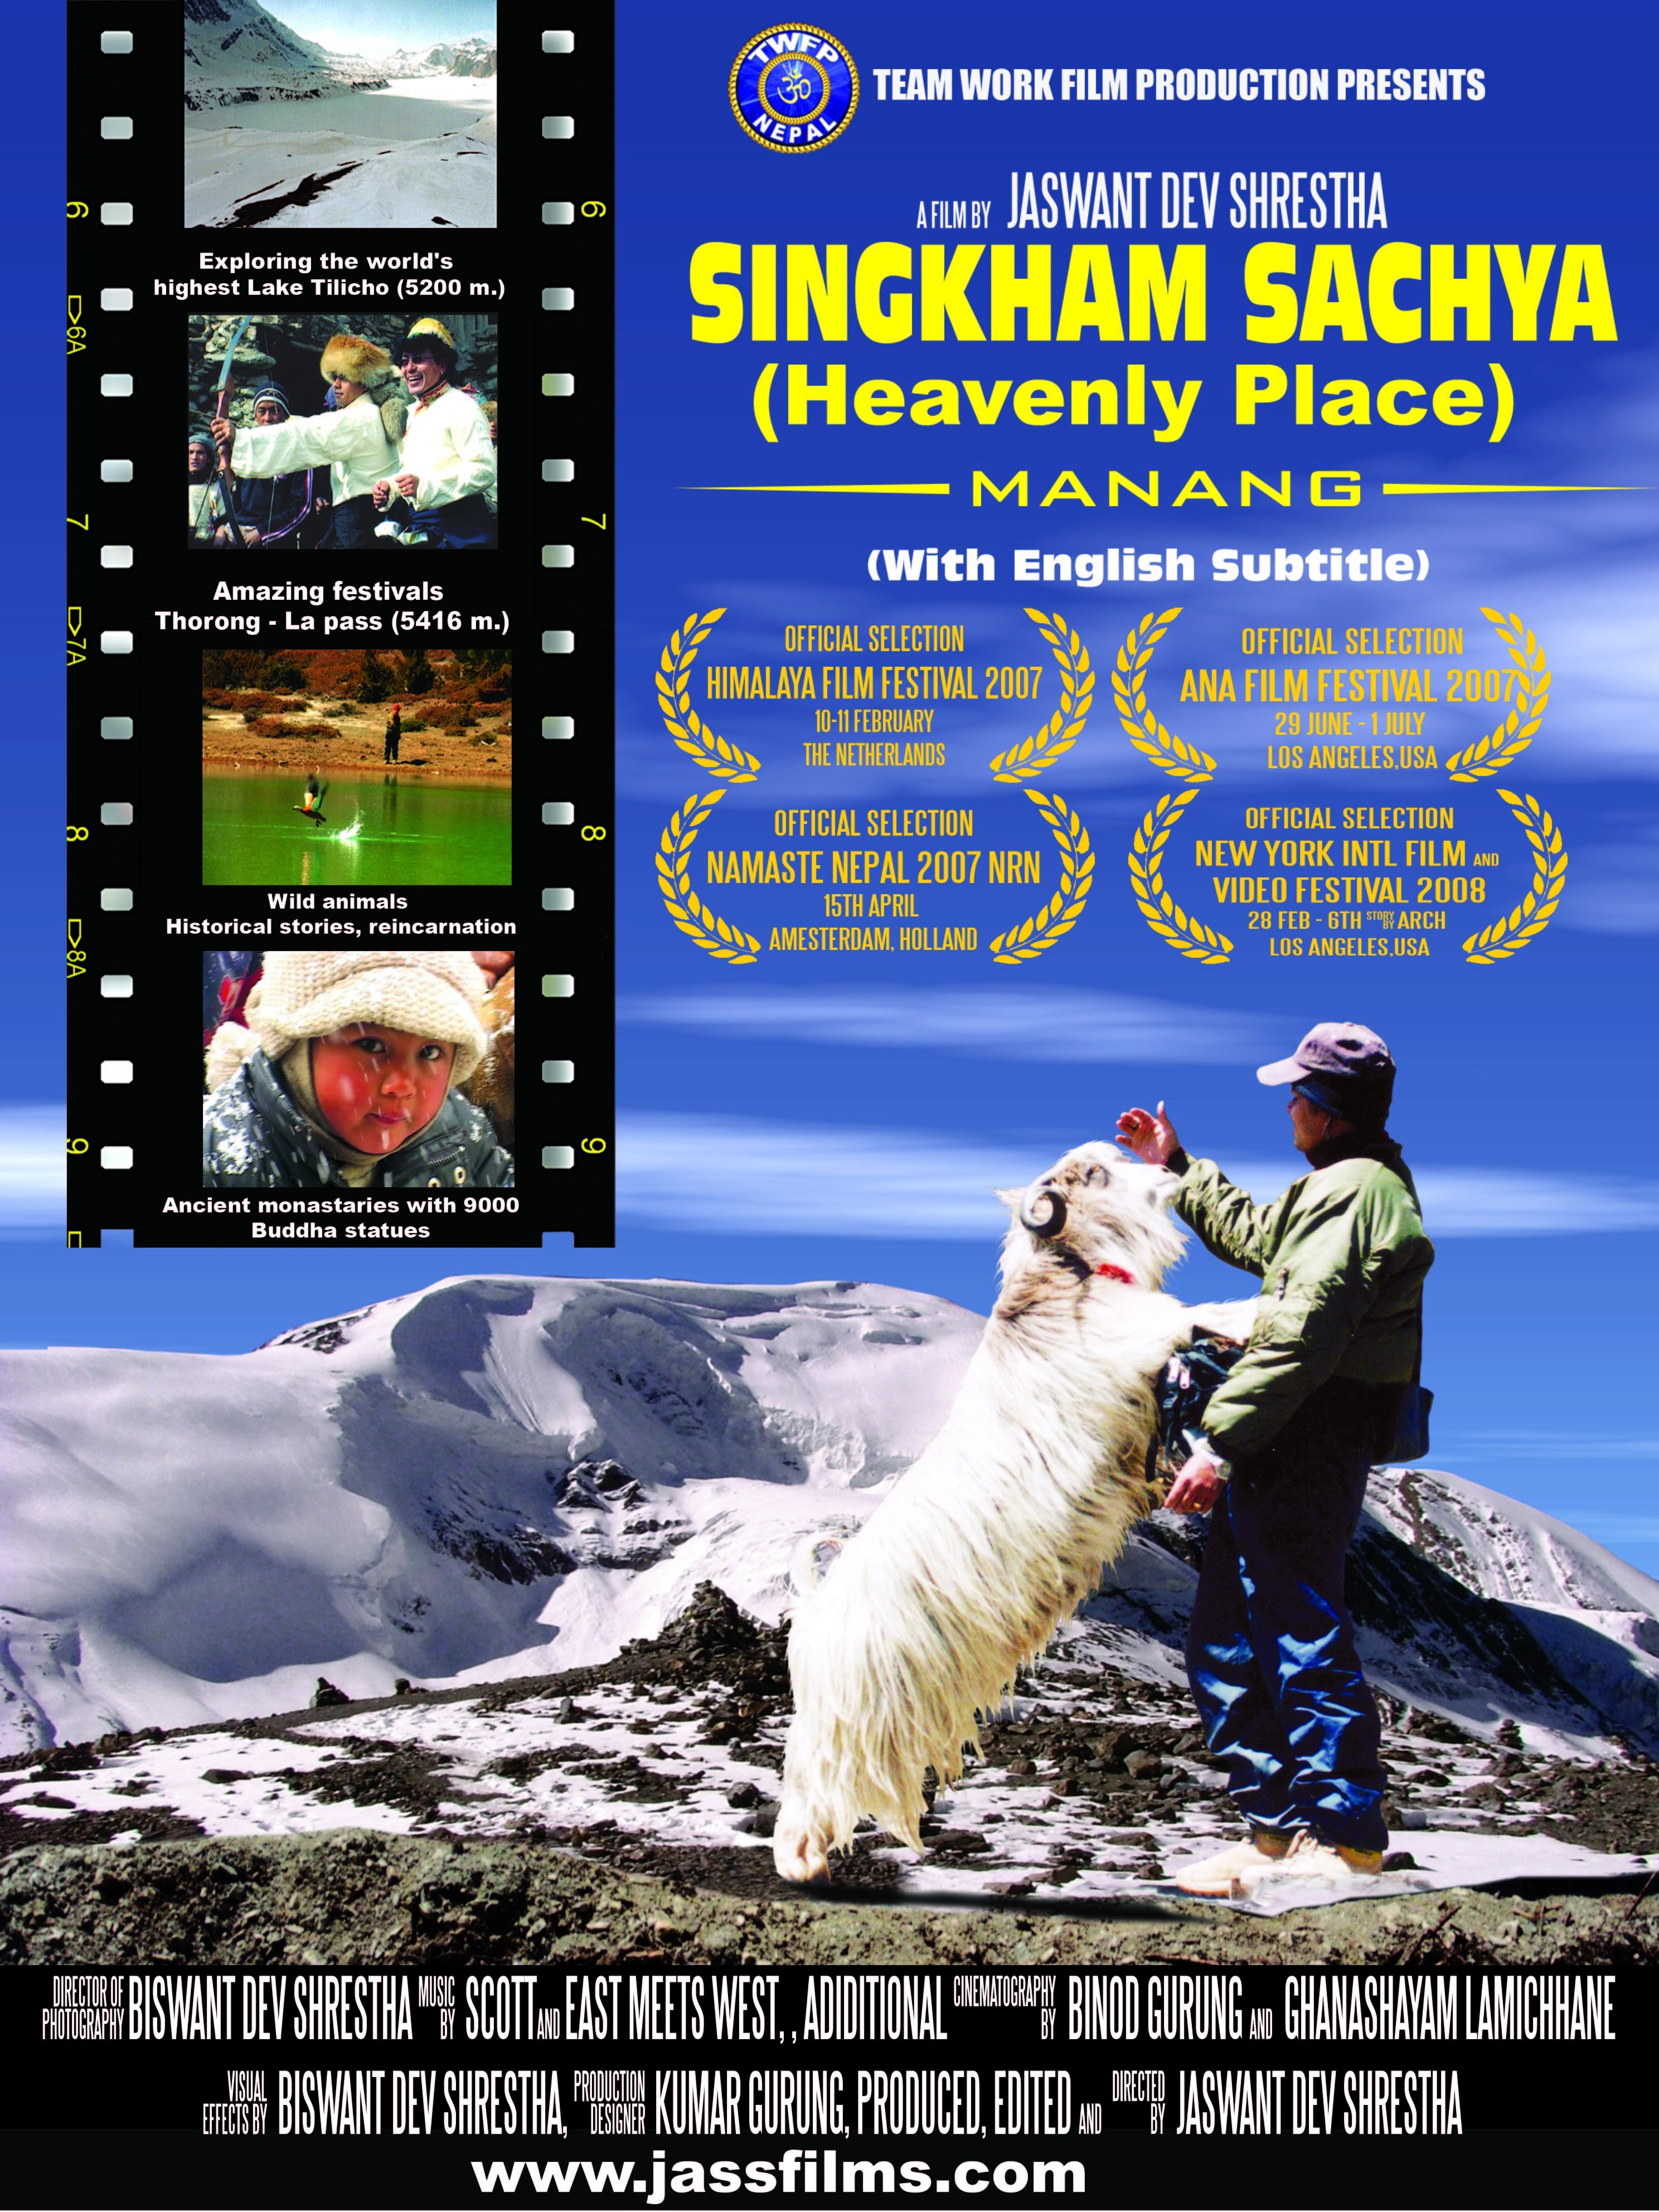 Biswant Dev Shrestha and Jaswant Dev Shrestha in Heavenly Place Manang (2005)